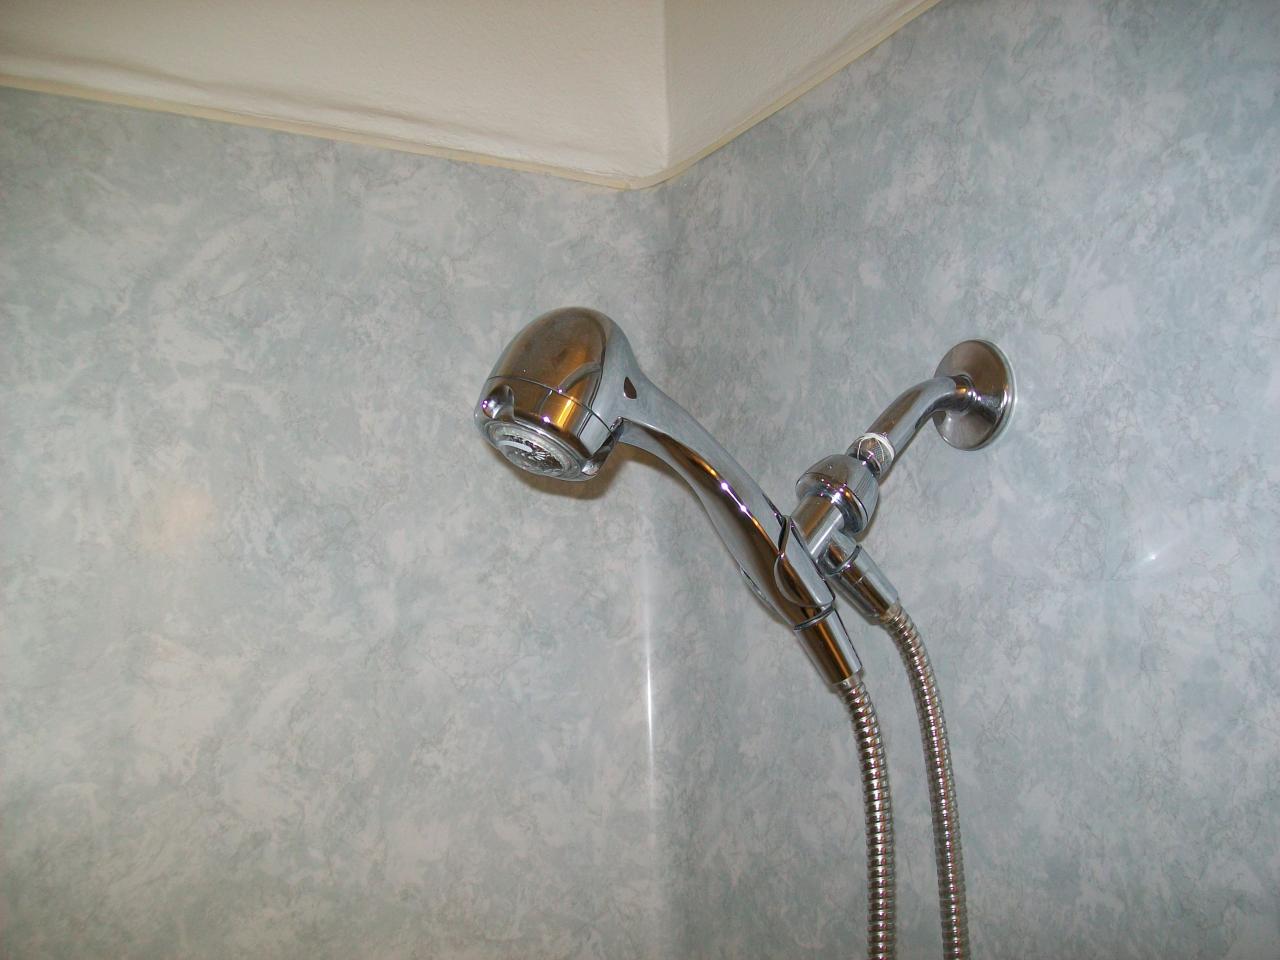 Photo of Kingsbury Villas Apartments - shower head detail